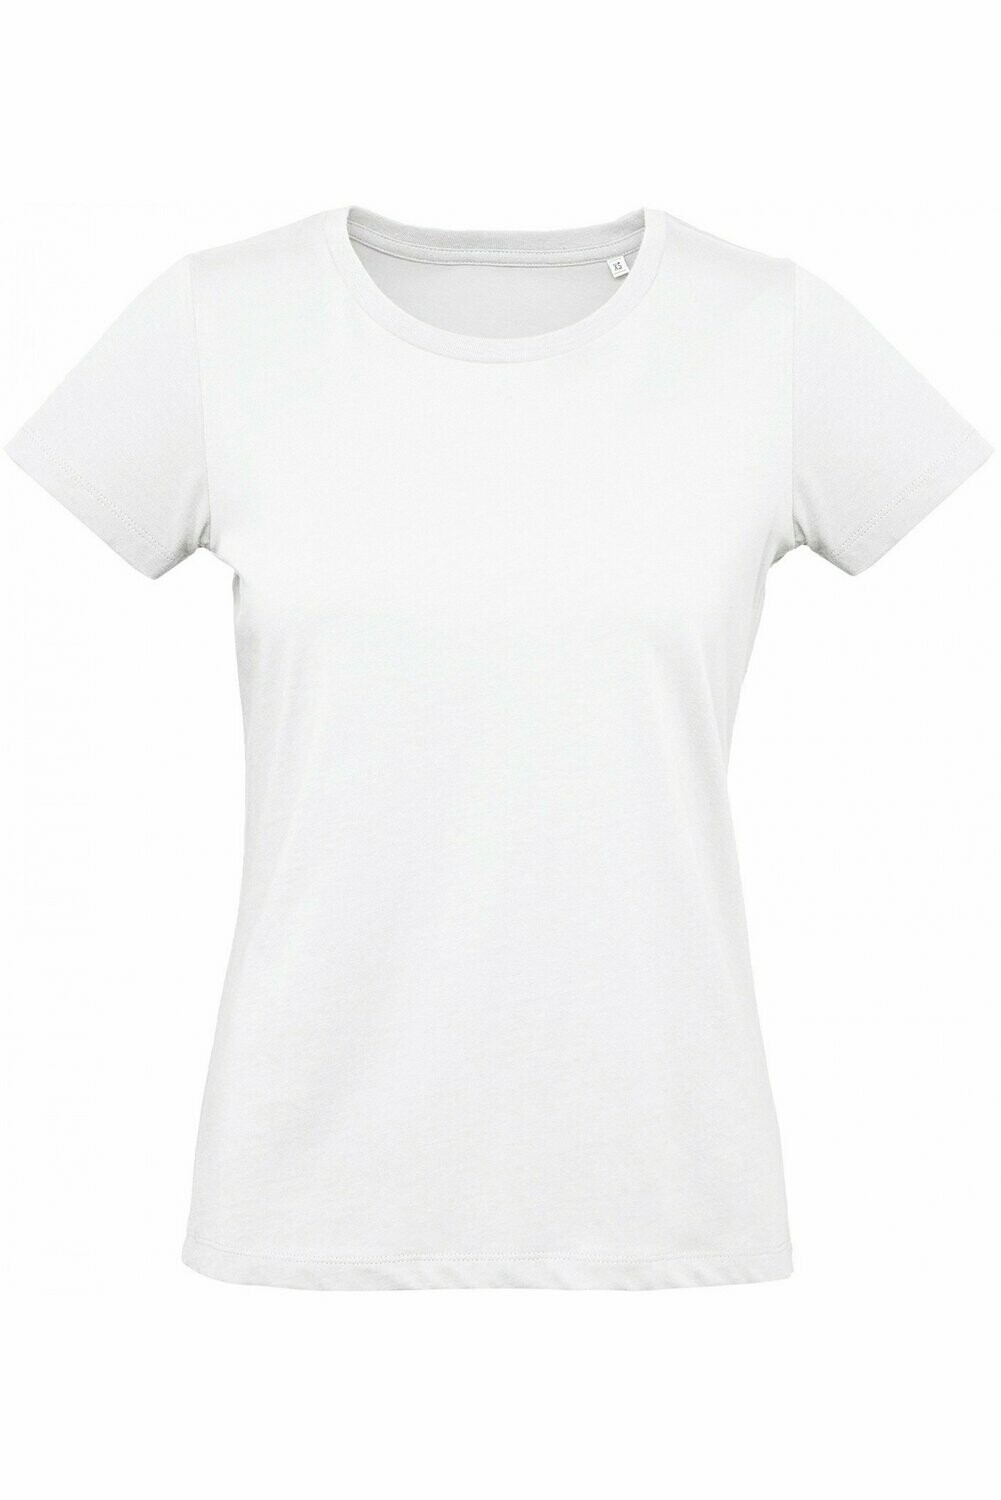 Tee-shirt Femme B&C 100% Coton bio Inspire Plus Col Rond 175gr